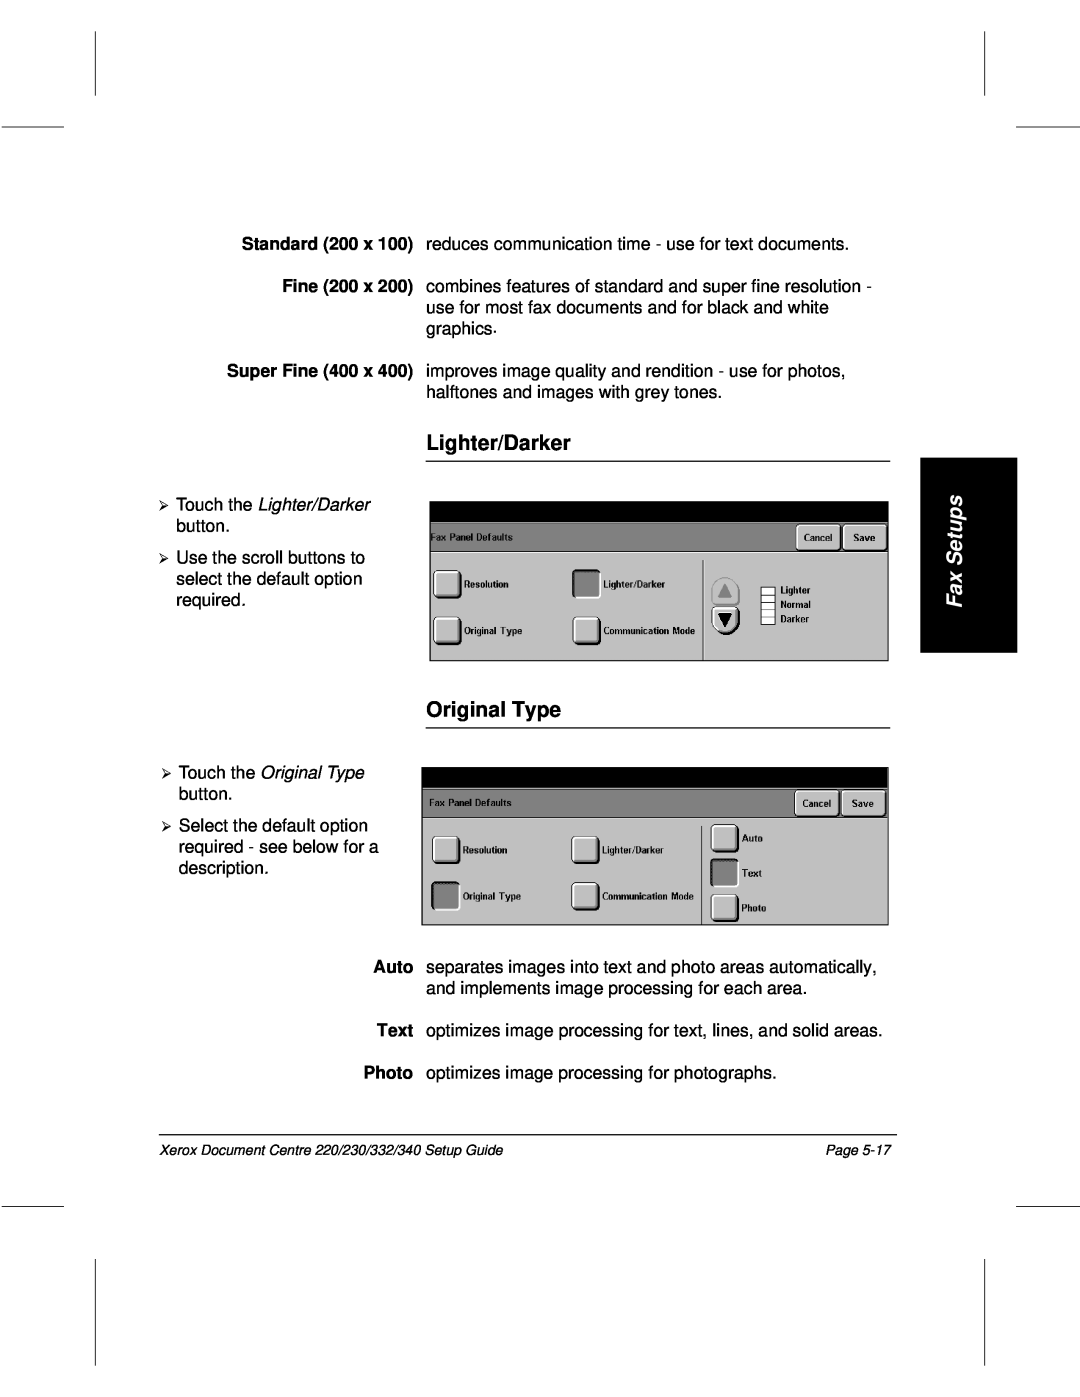 Xerox 230, 340, 332, 220 setup guide Fax Setups, Touch the Lighter/Darker, Touch the Original Type 